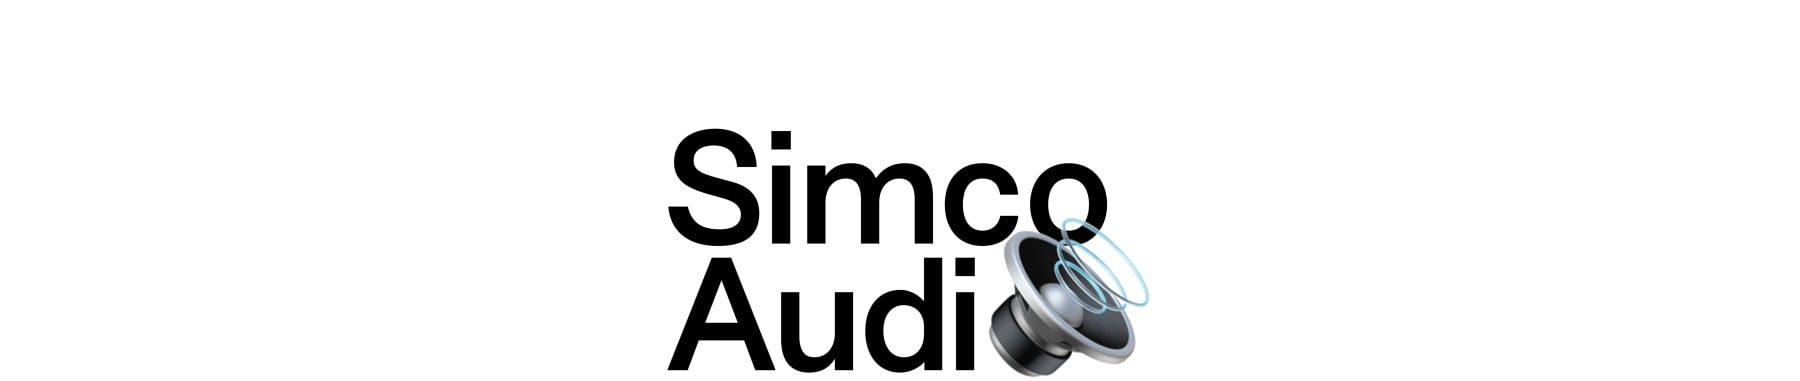 Simco Audio - Music & Audio Residency - Residencies - Simchowitz Gallery